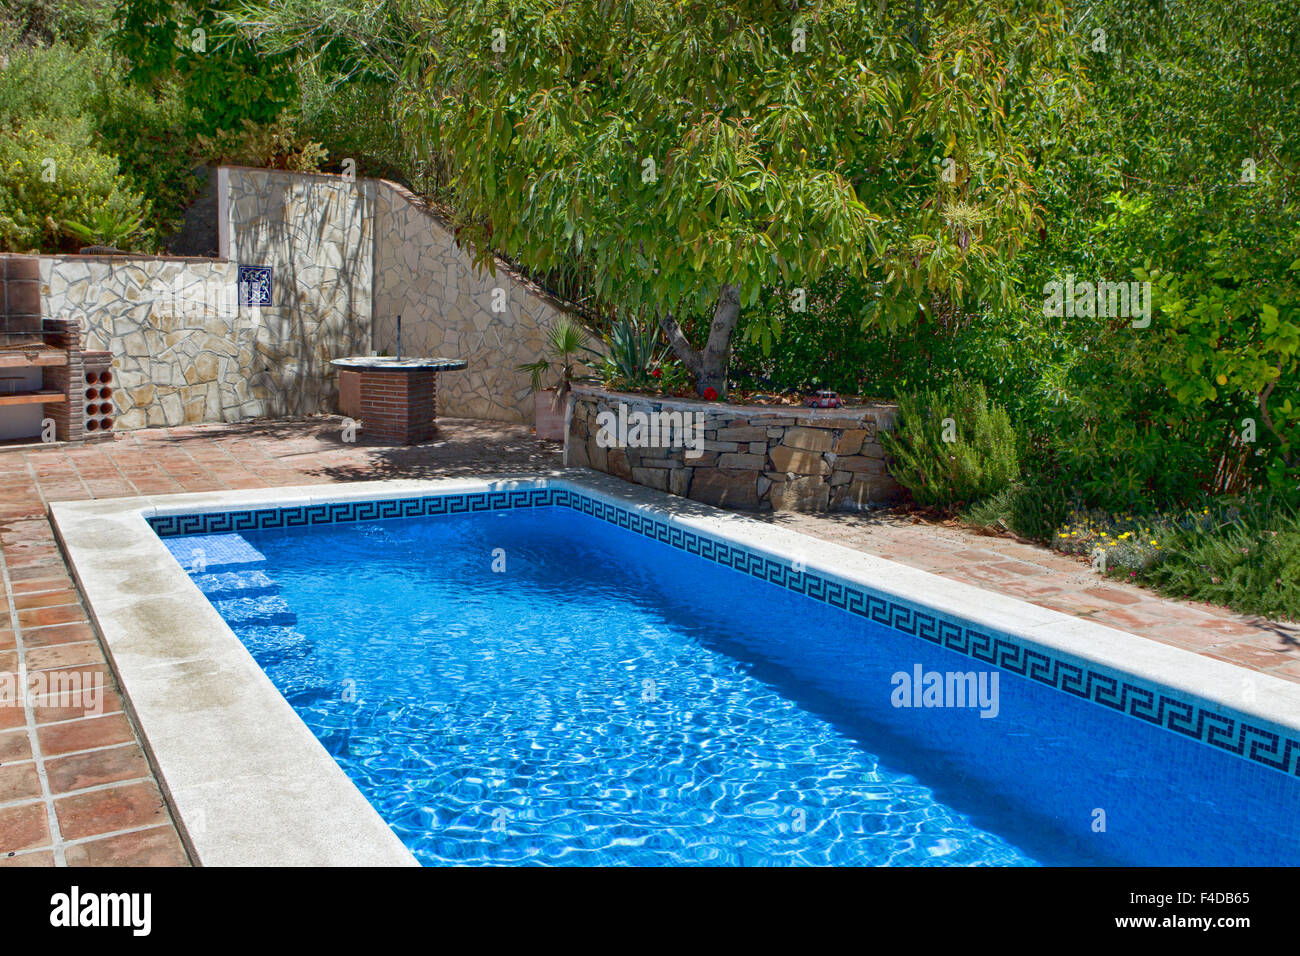 Swimming pool in Andalucian style villa in Competa, Malaga province, Spain Stock Photo